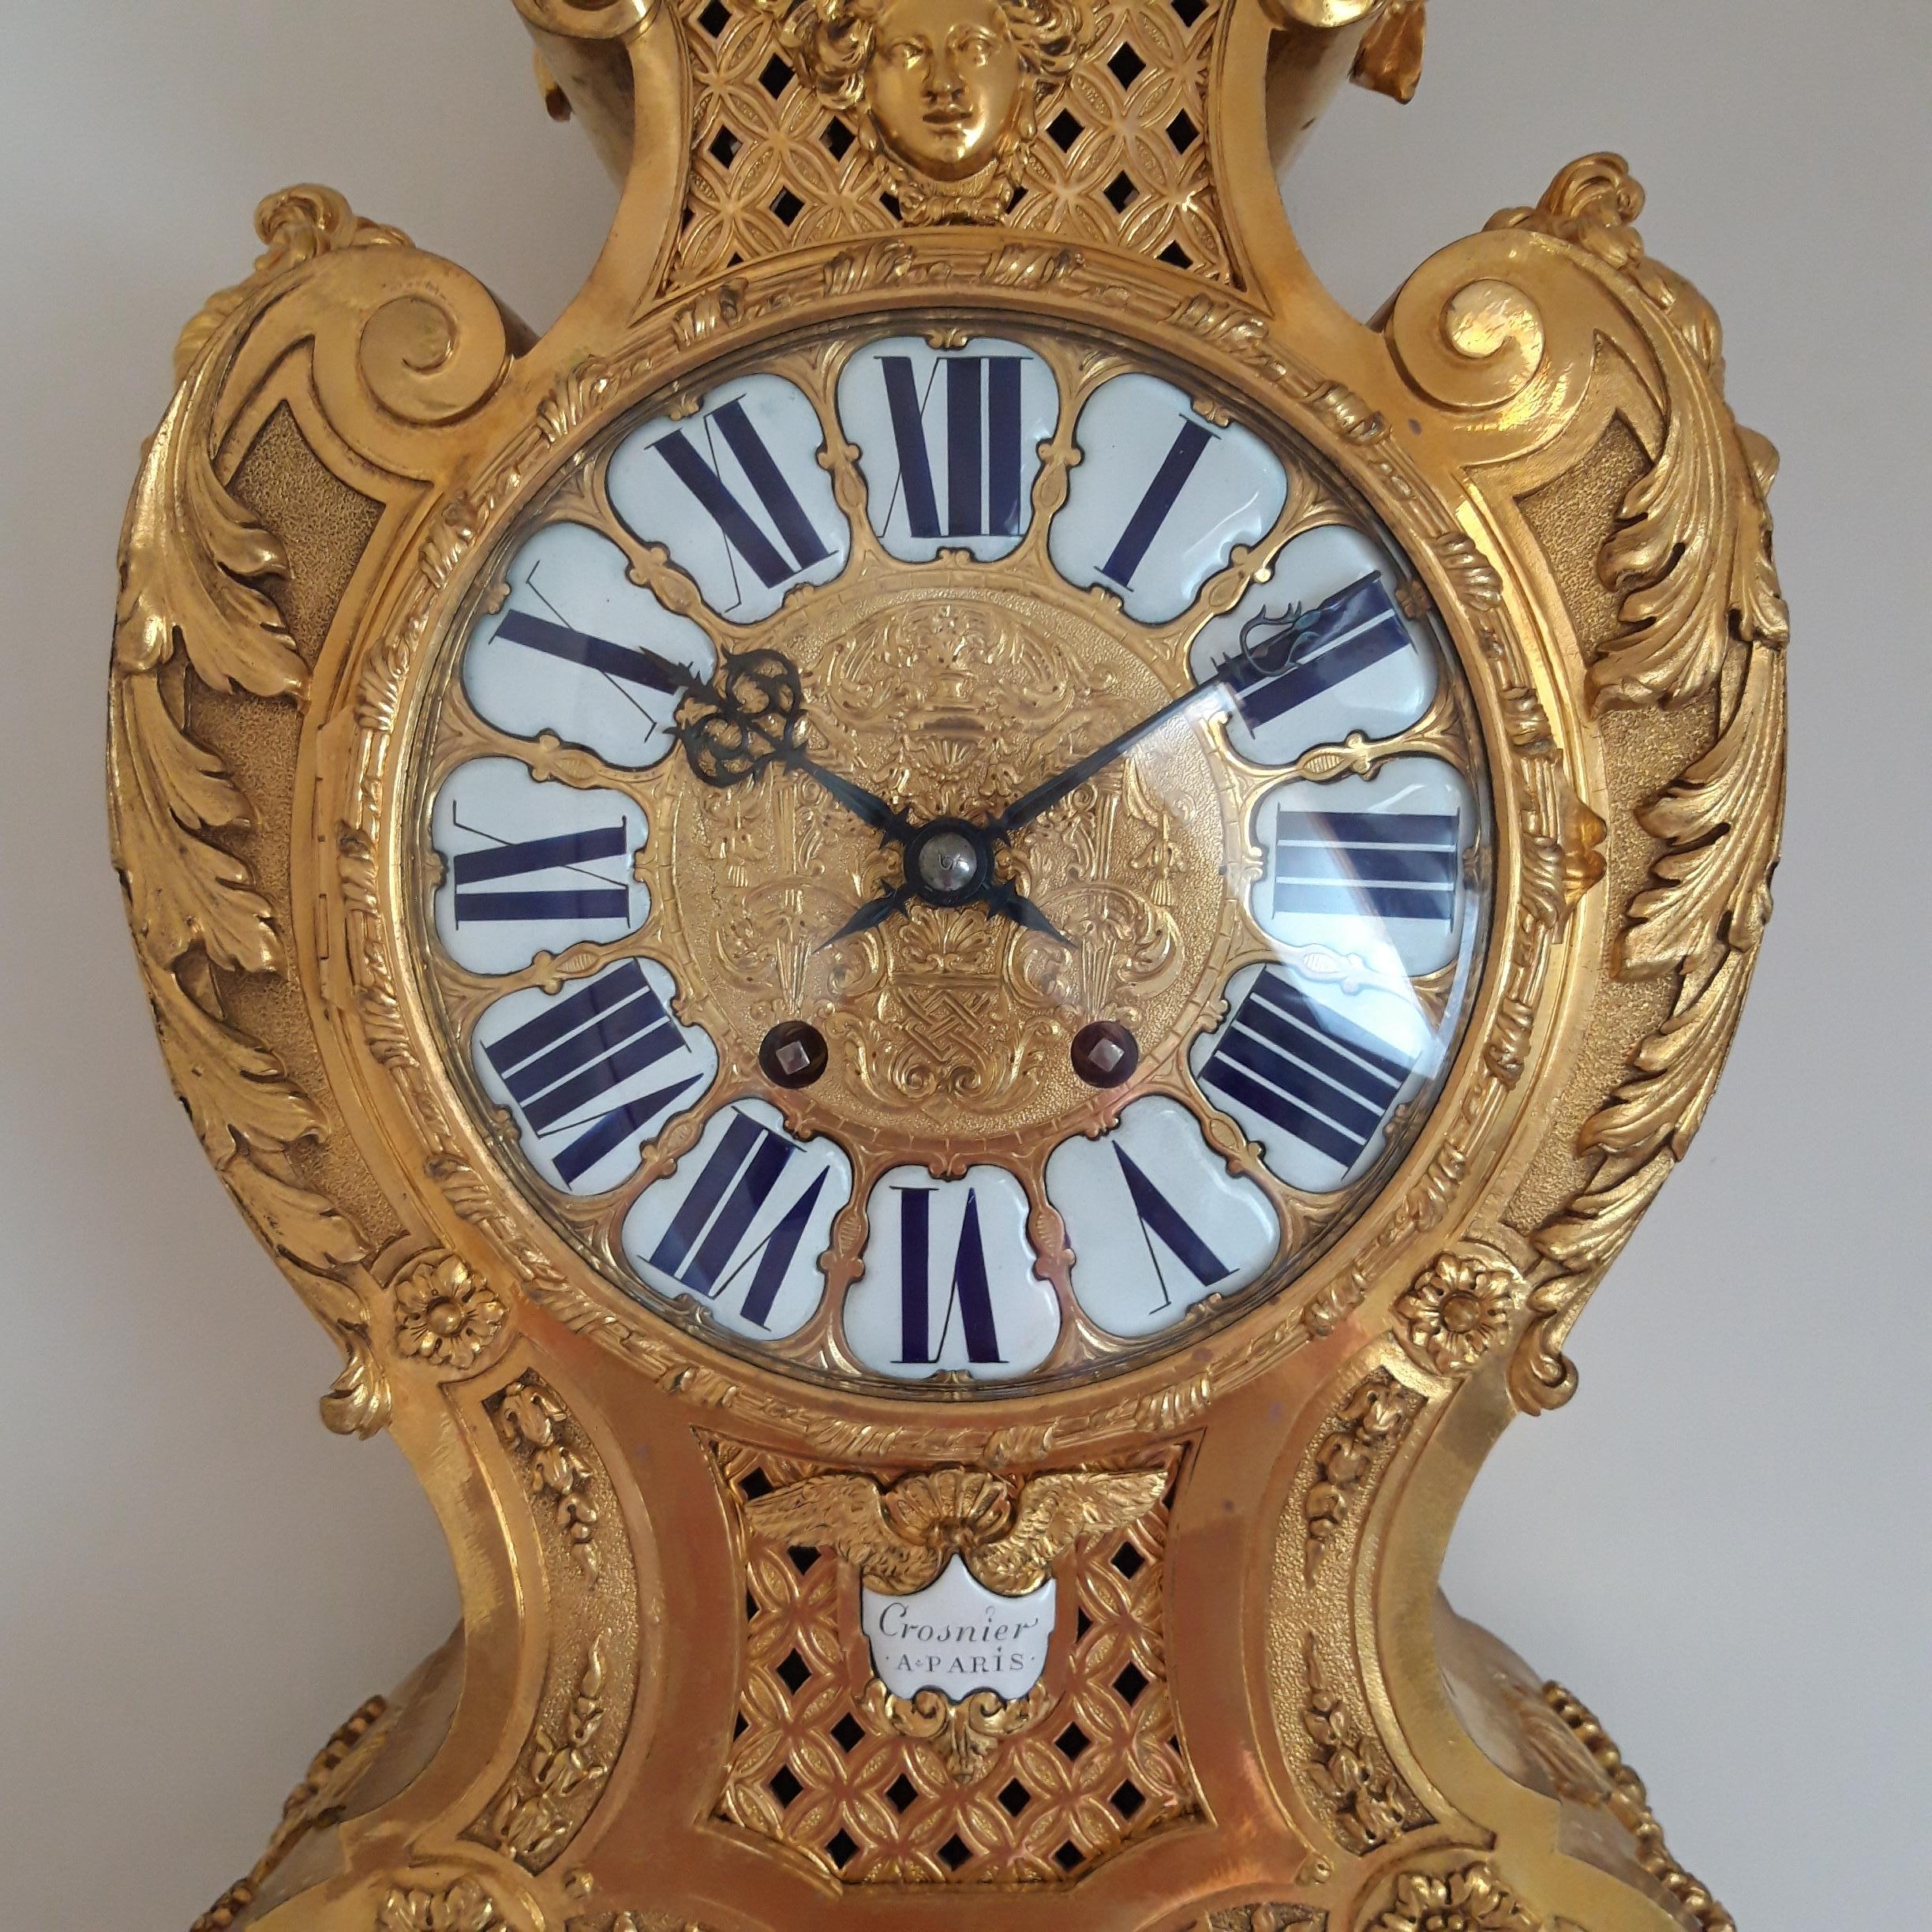 Large gilt bronze clock by Crosnier Paris.
France, 19th century. Movement by Lefebvre.
Including winding key.